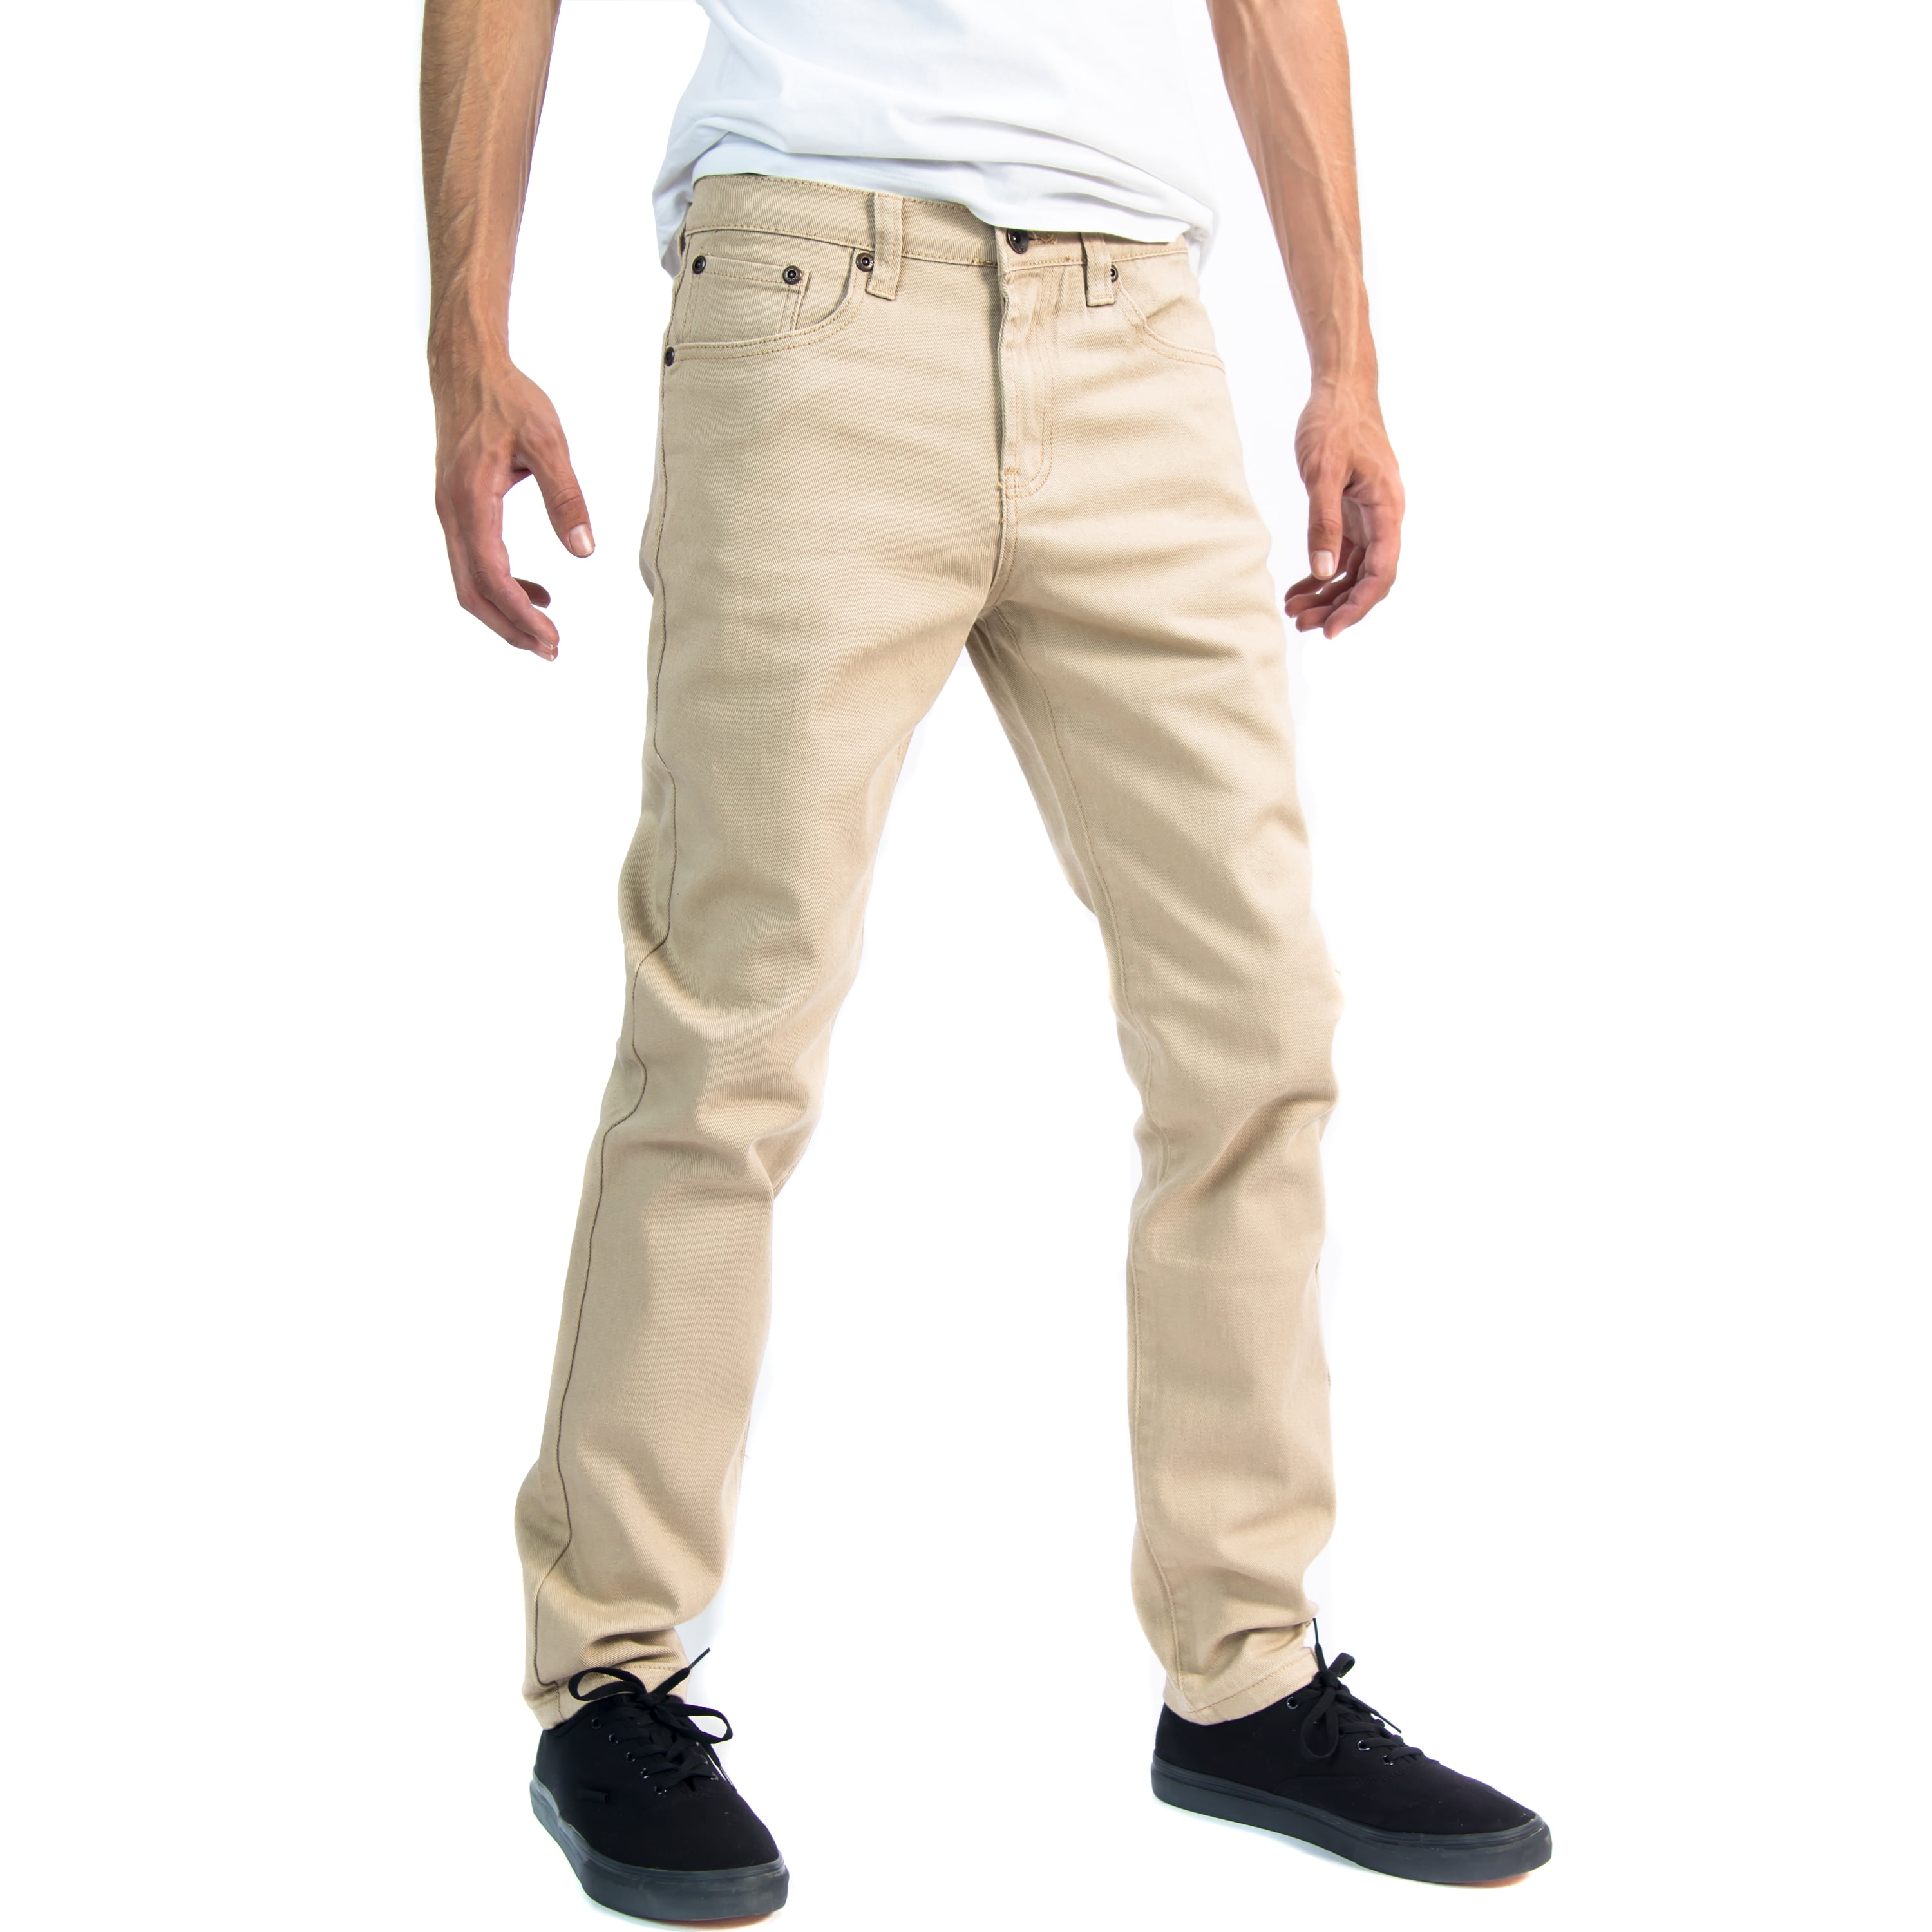 Road Jeans Wax Denim Slim Pant Size 36 Reg 